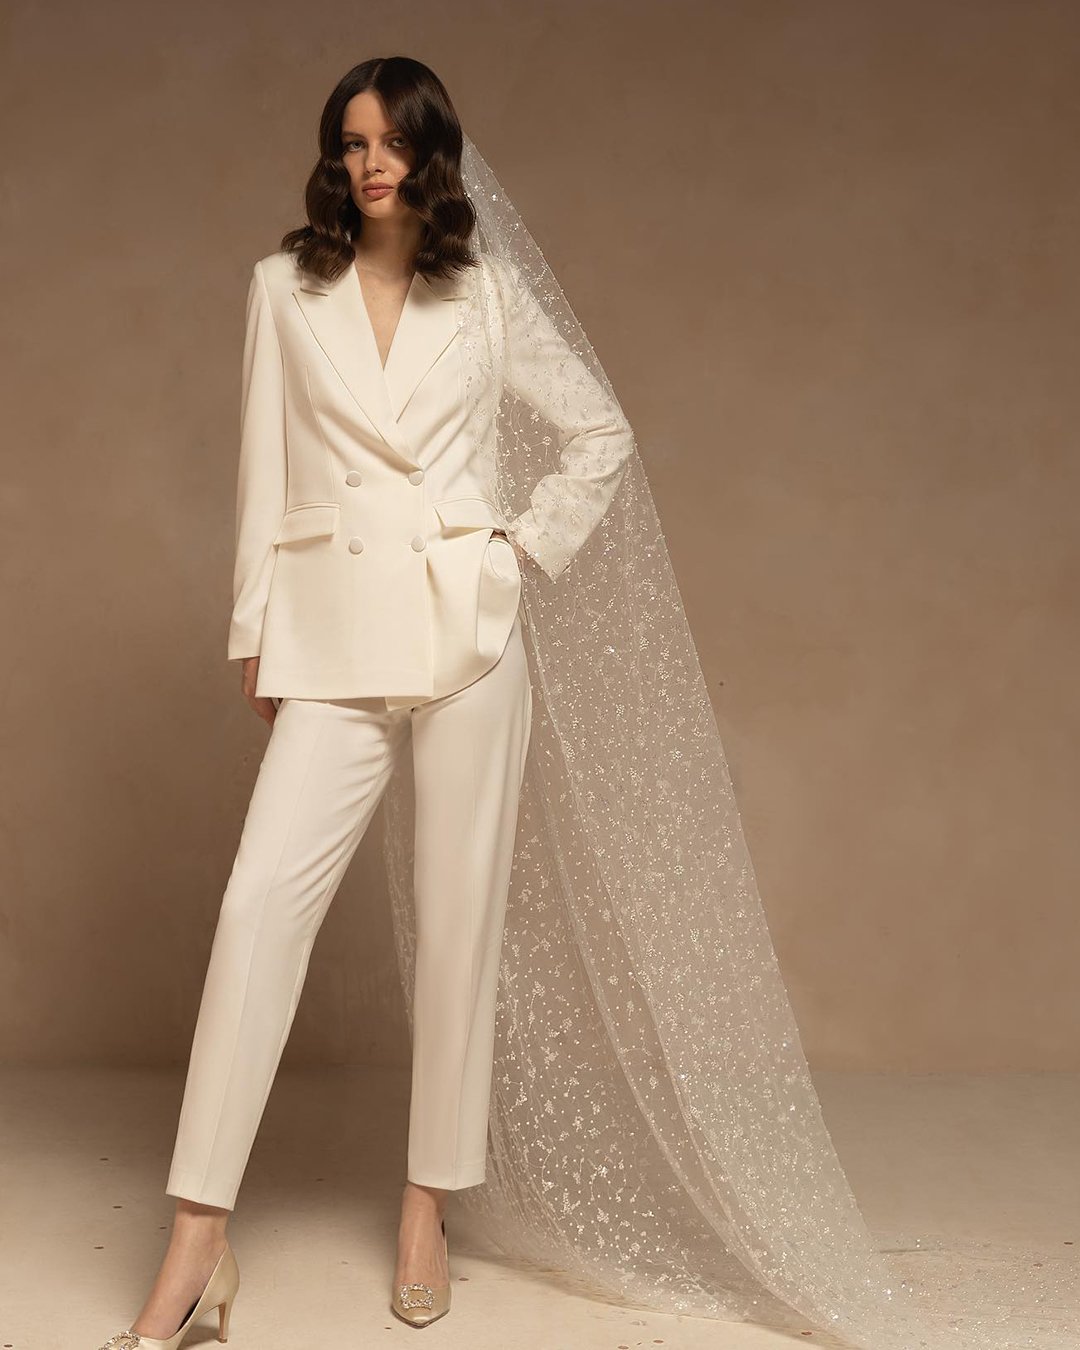 wedding pantsuit ideas simple with jacket evalendel